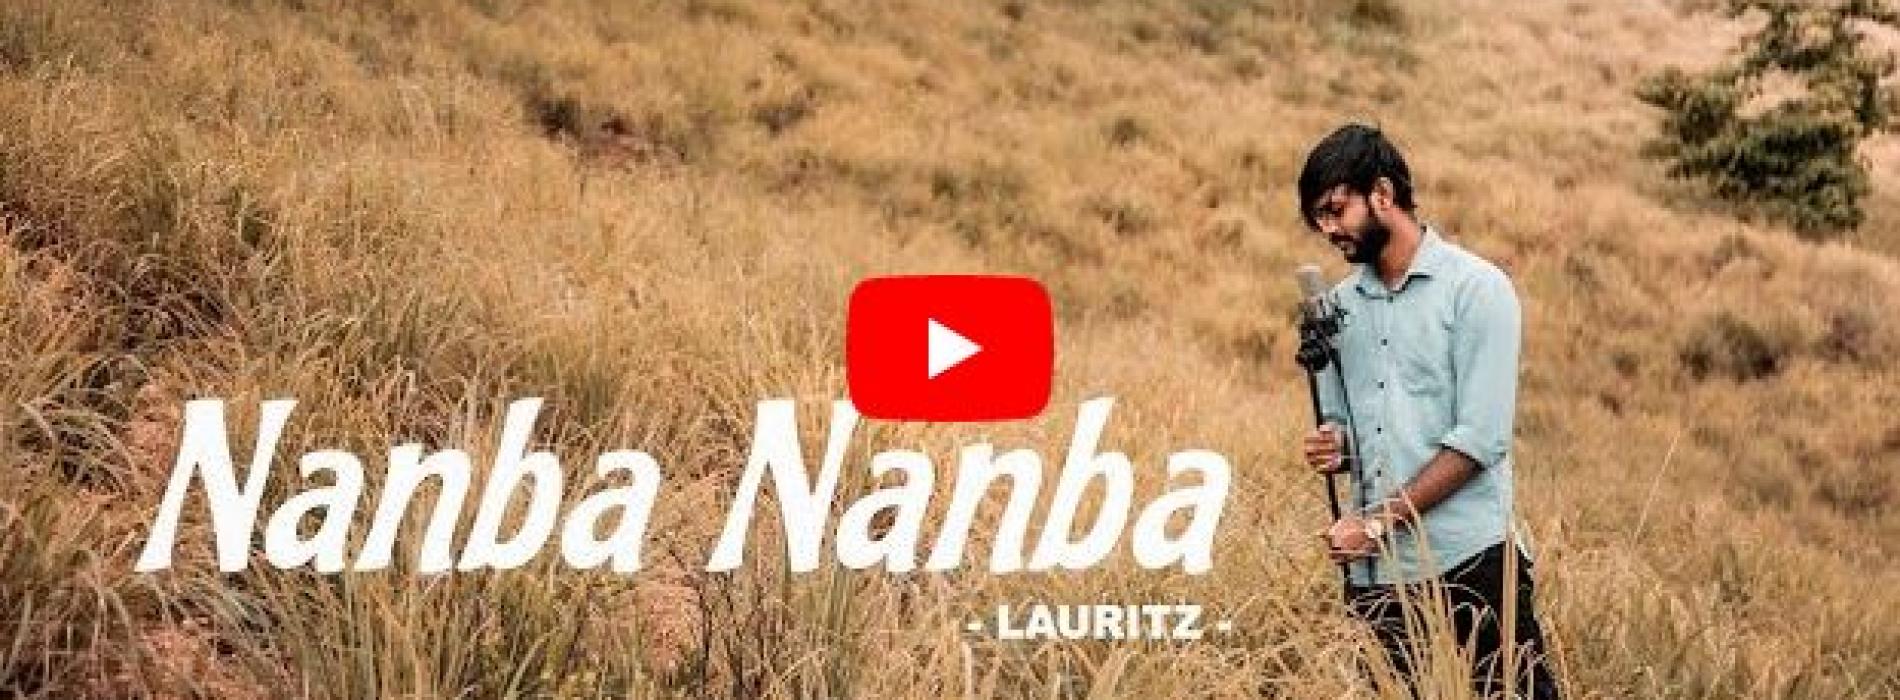 New Music : Nanba Nanba Cover By Lauritz Francis